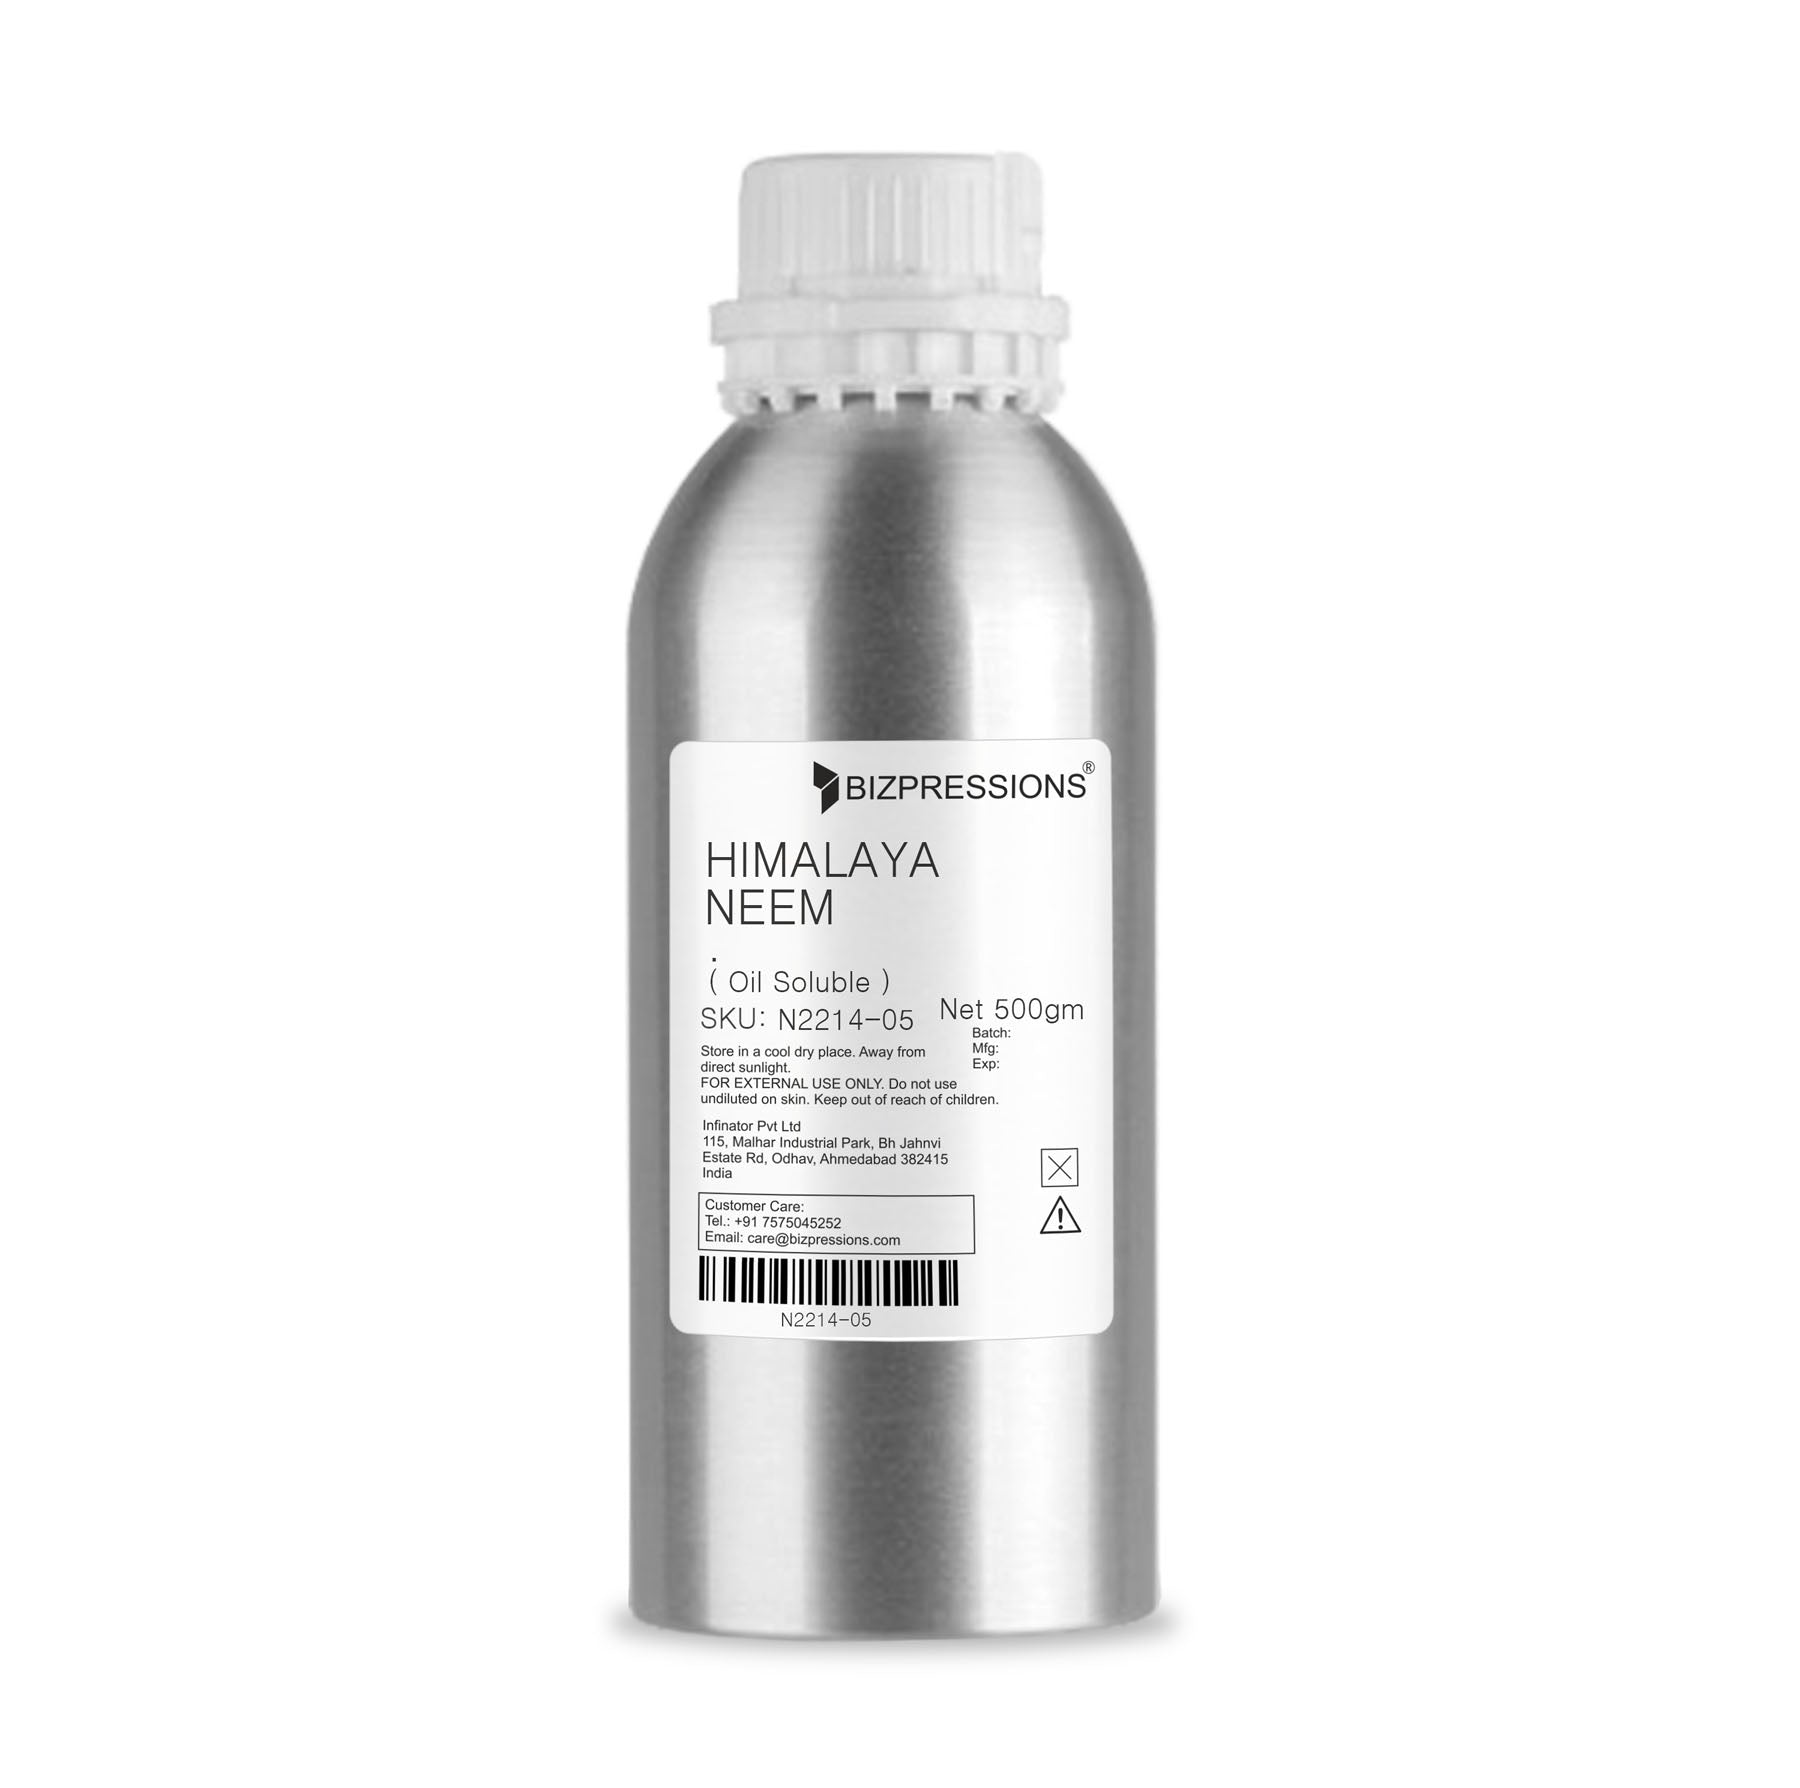 HIMALAYA NEEM - Fragrance ( Oil Soluble ) - 500 gm